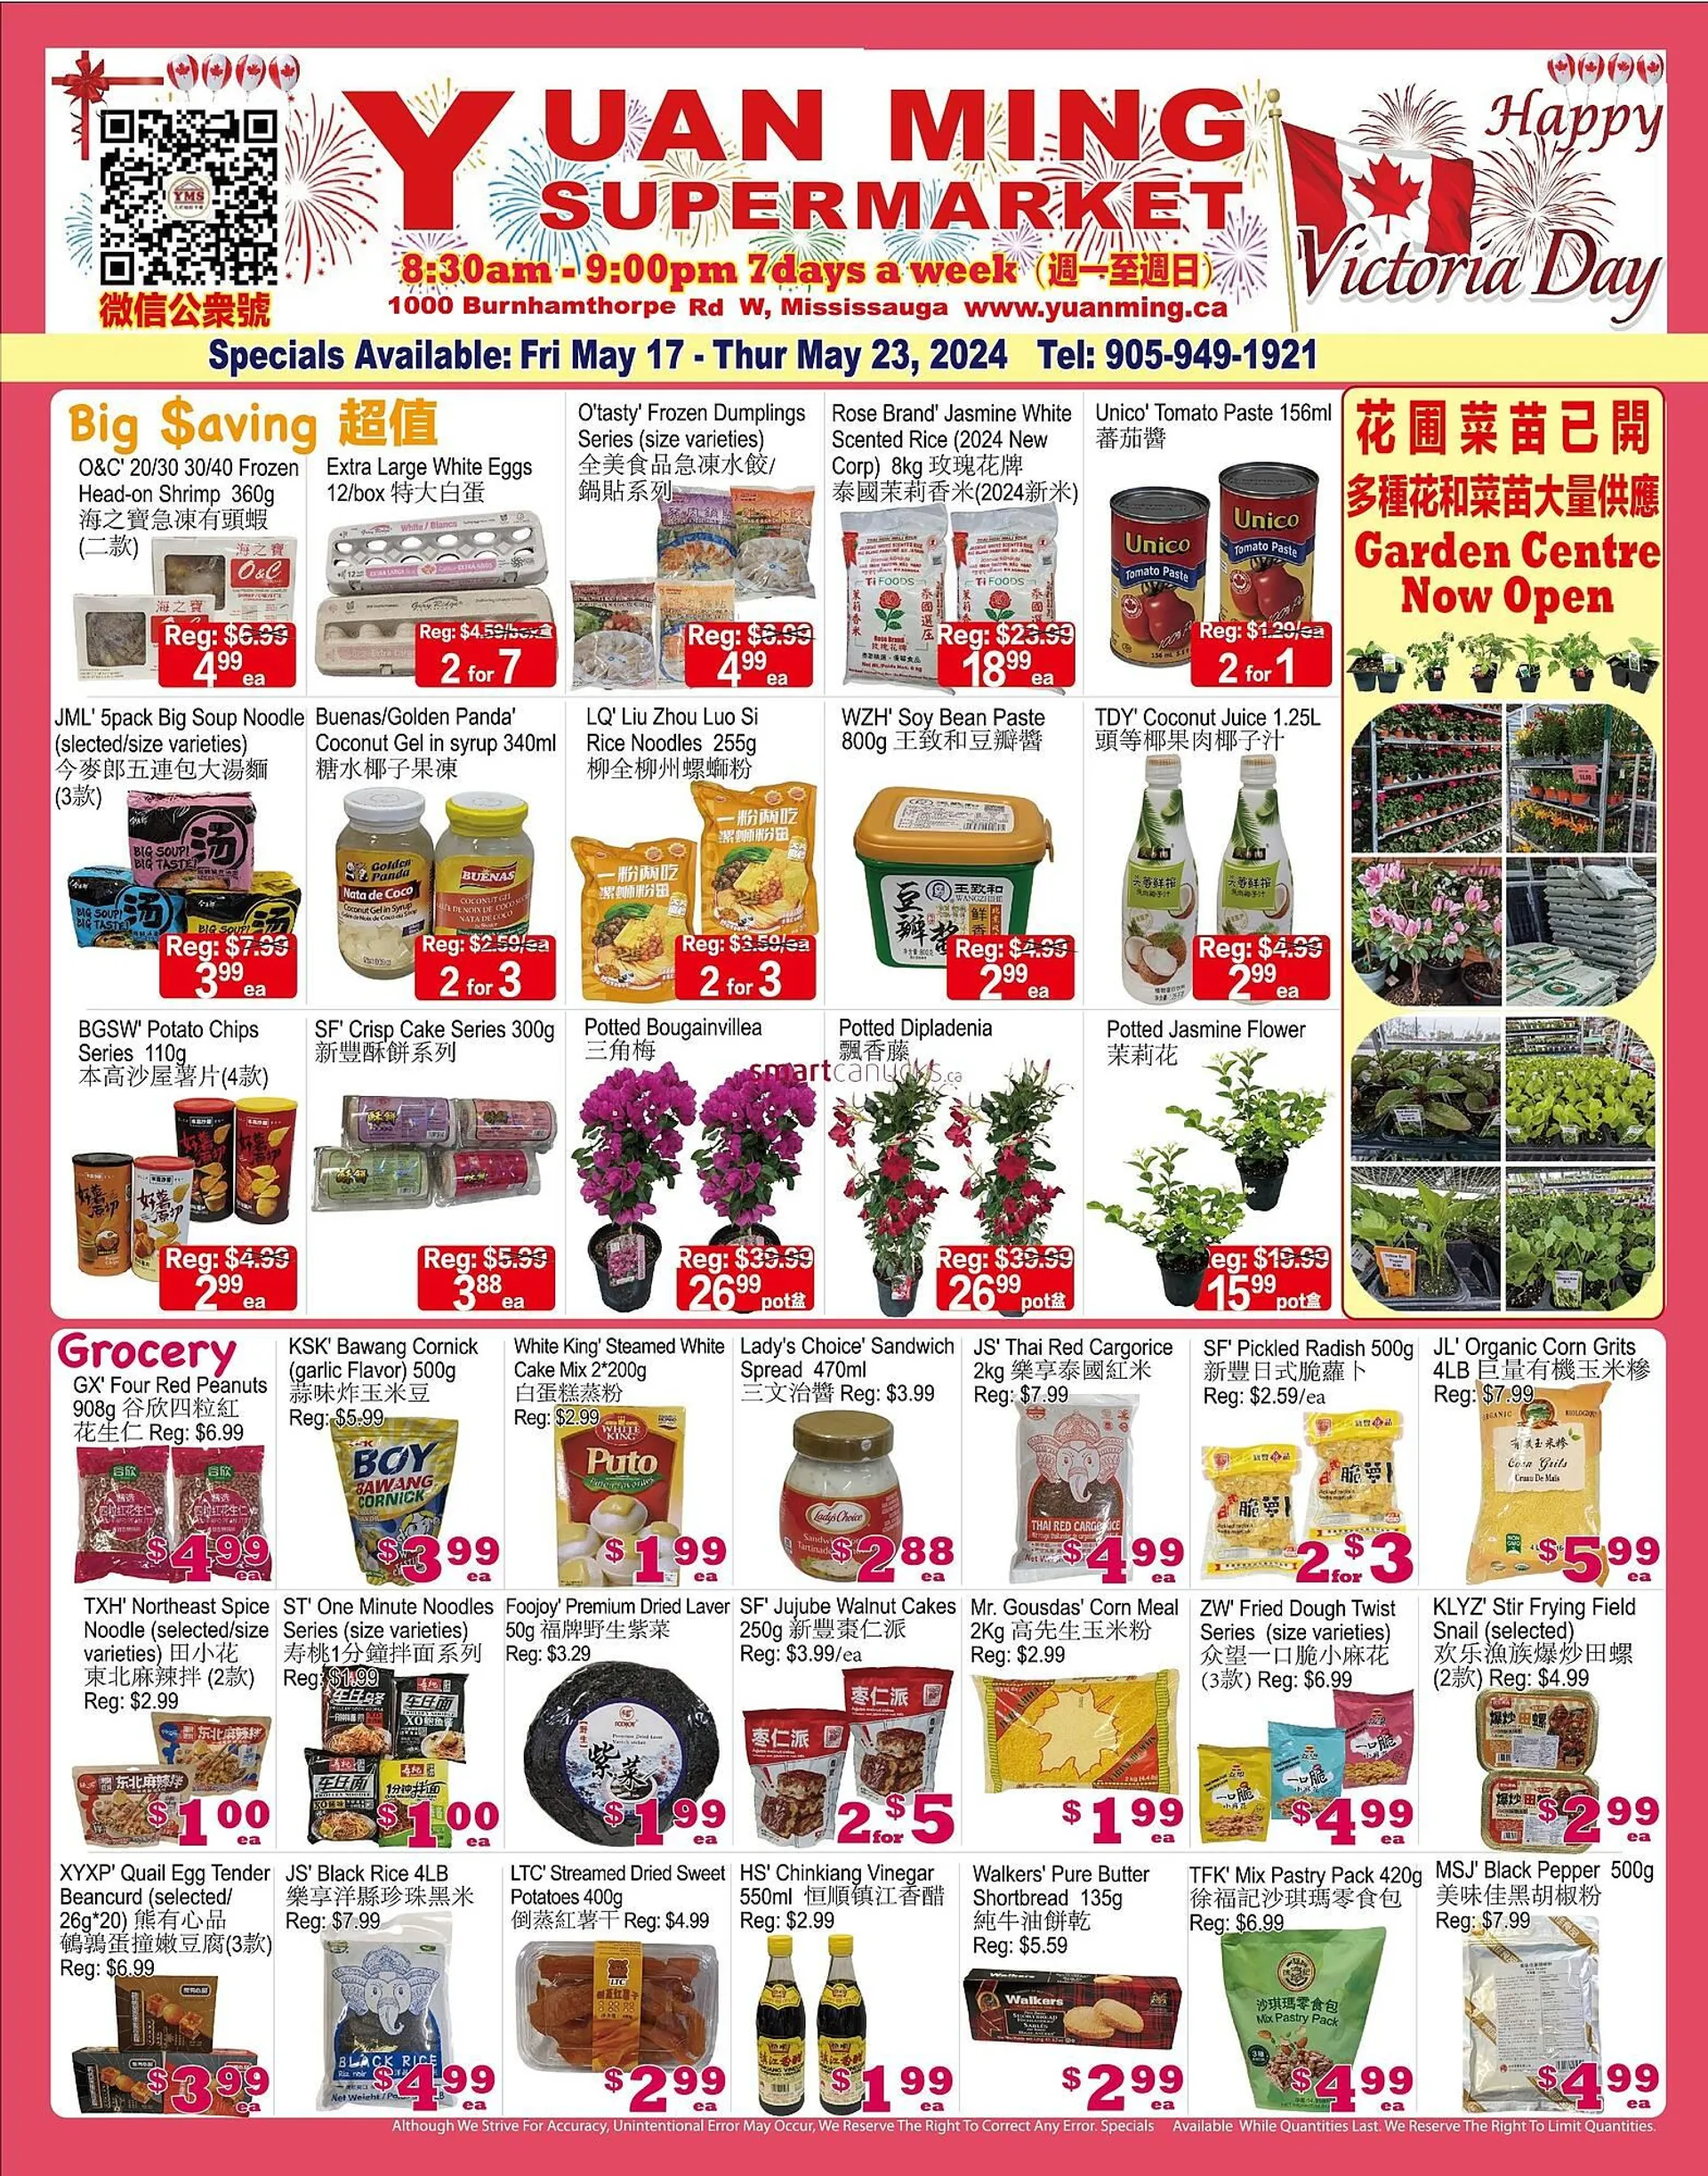 Yuan Ming Supermarket flyer - 1